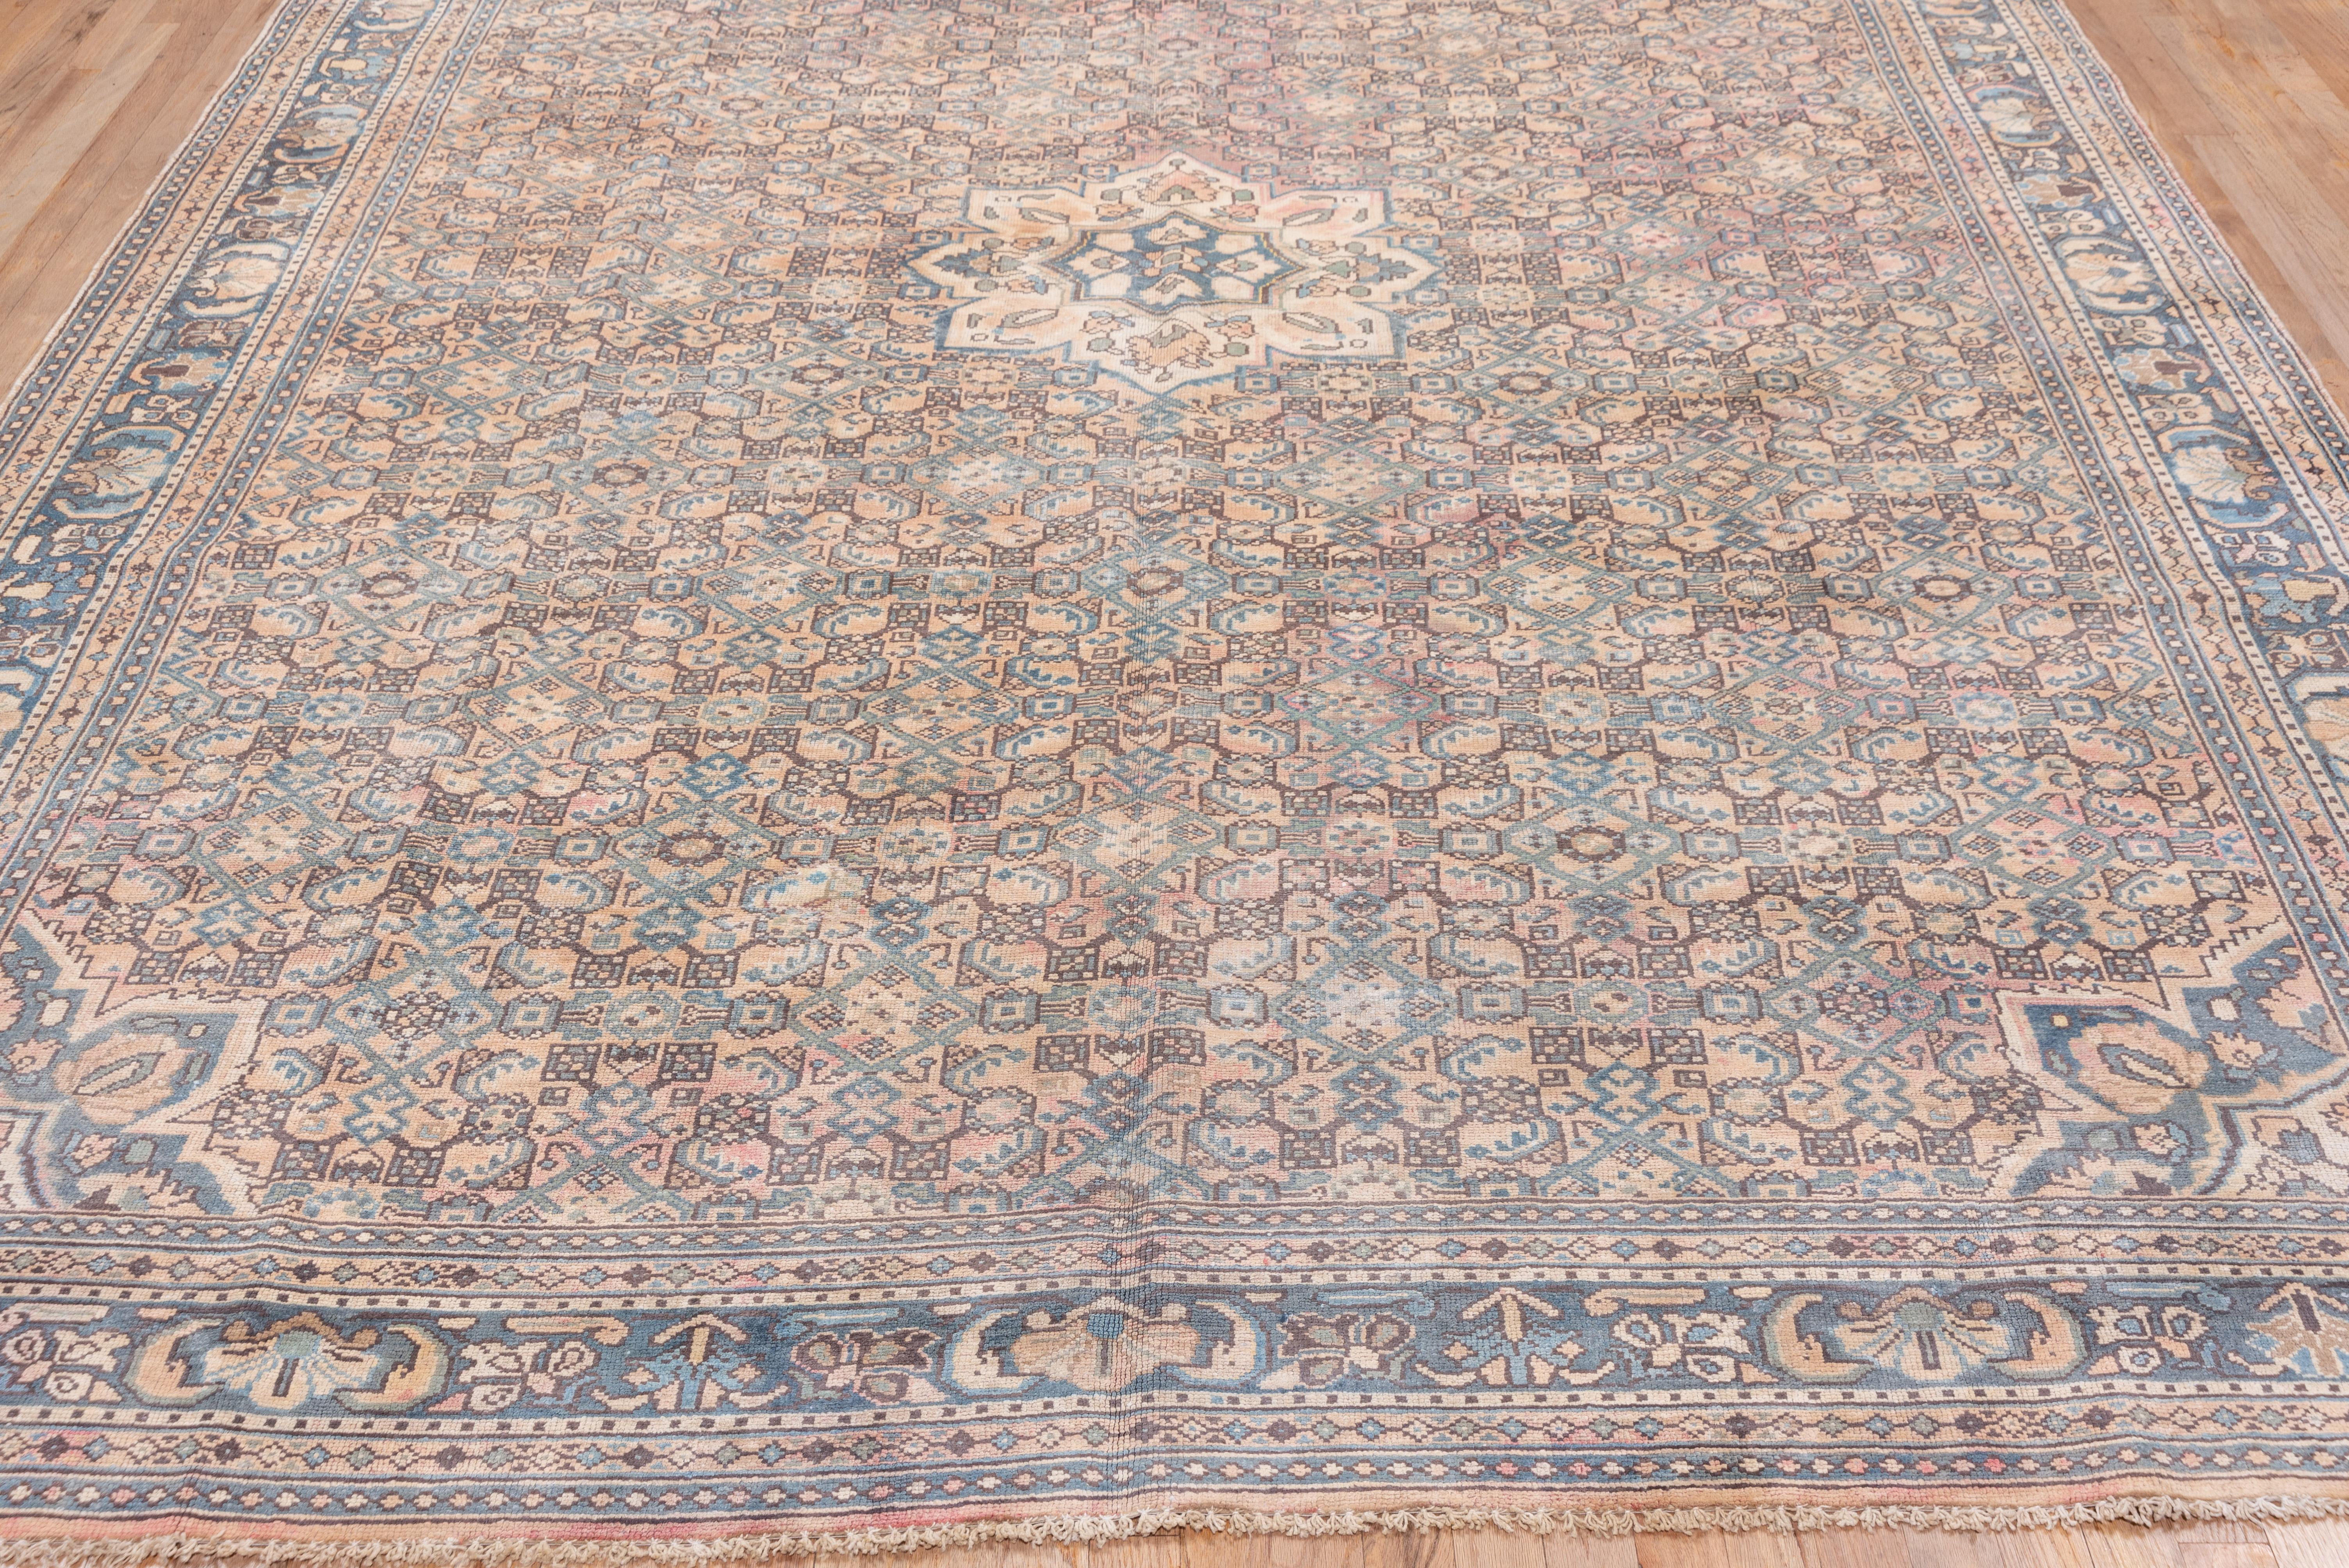 Early 20th Century Antique Persian Hamadan Carpet, Soft Colors, circa 1920s